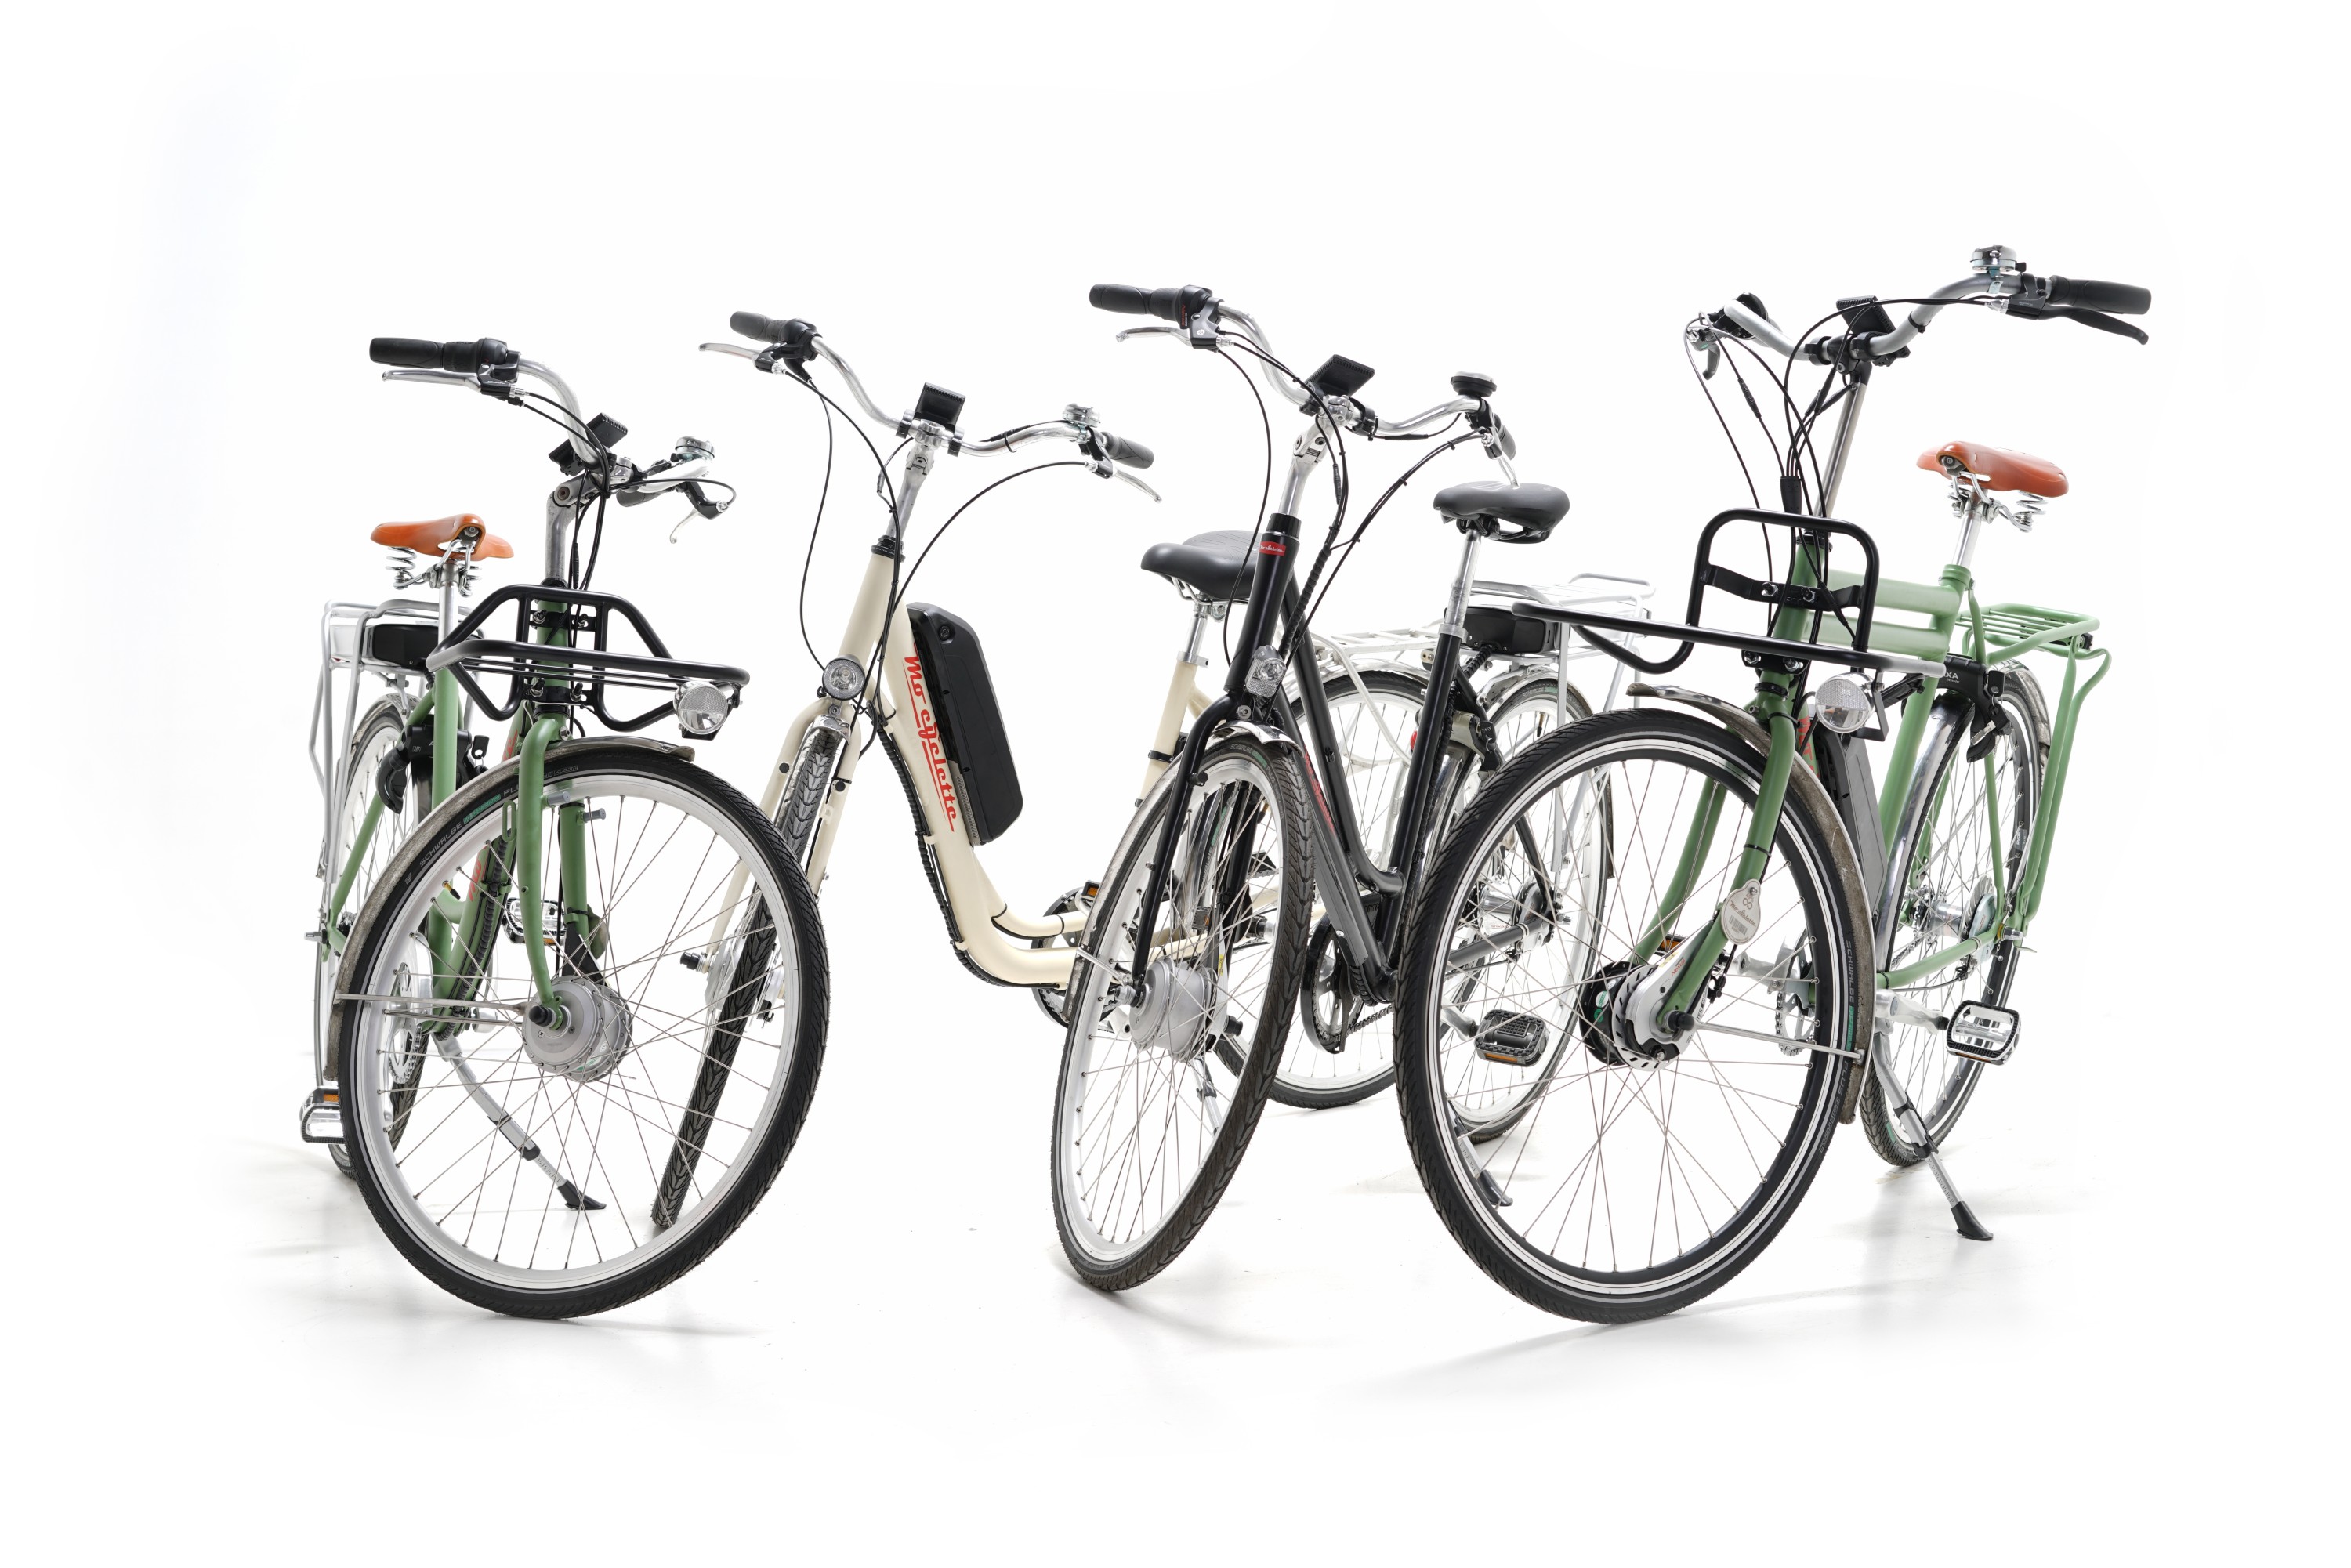 Omgekeerd periodieke Wereldwijd Circulaire fiets (Circulair fietsen) - Mo-Cyclette